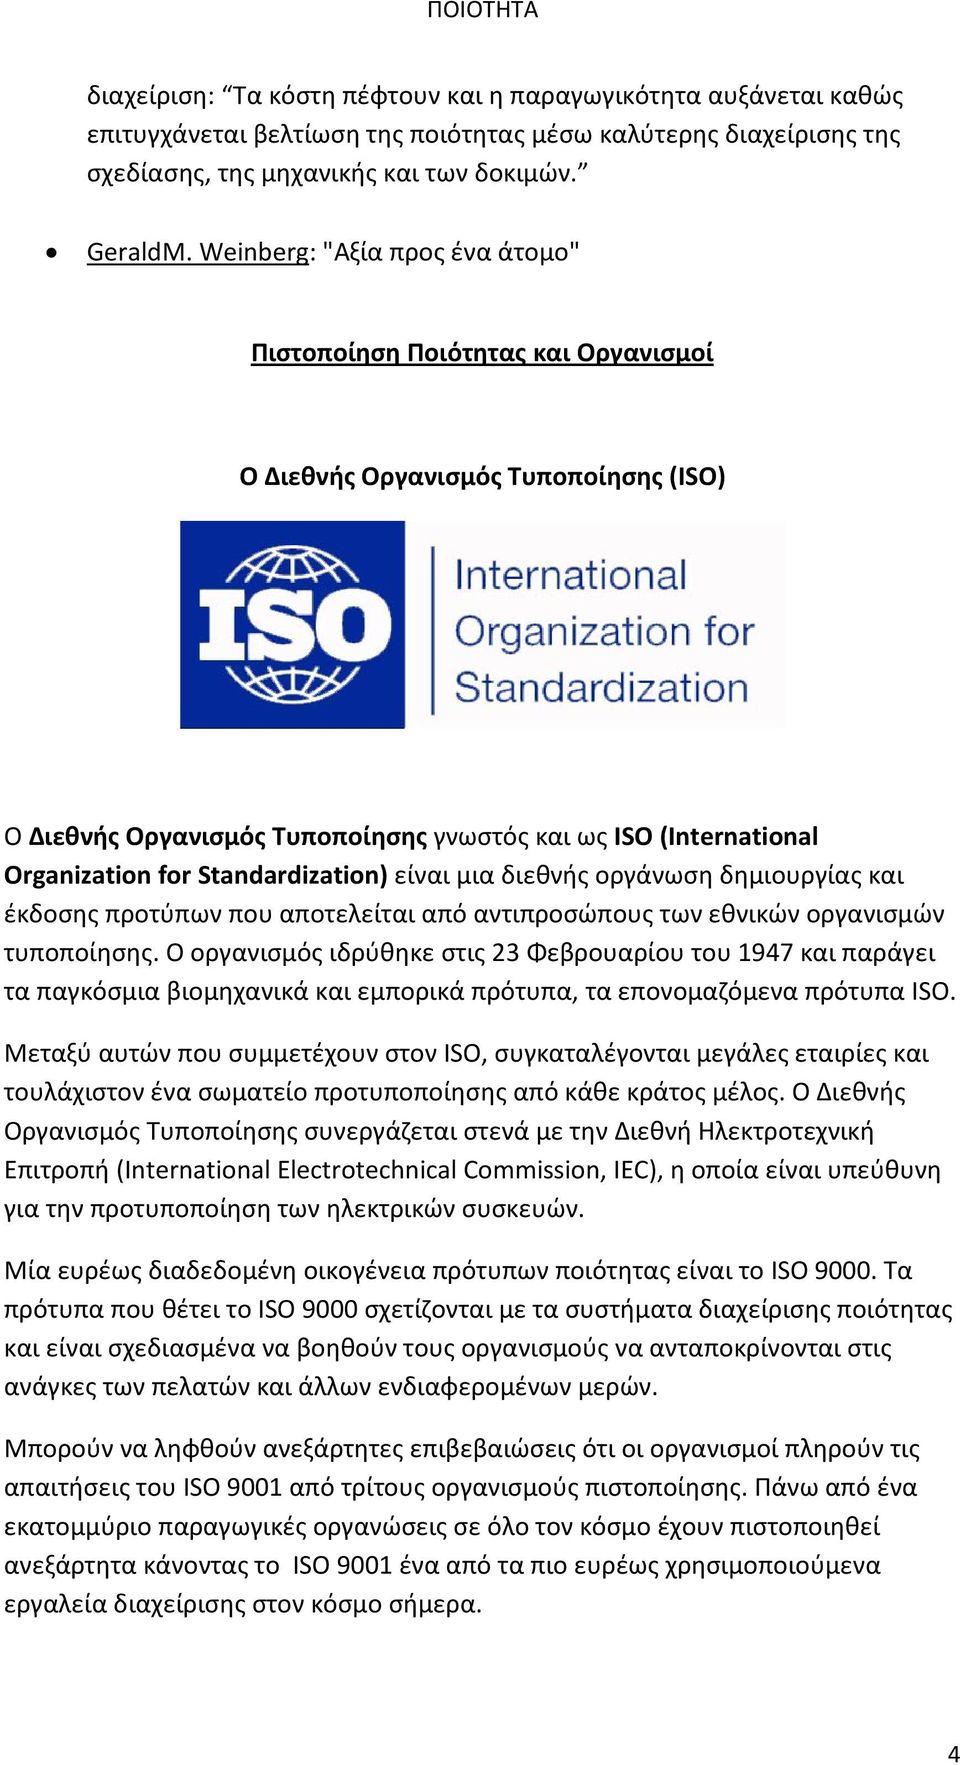 Standardization) είναι μια διεθνής οργάνωση δημιουργίας και έκδοσης προτύπων που αποτελείται από αντιπροσώπους των εθνικών οργανισμών τυποποίησης.